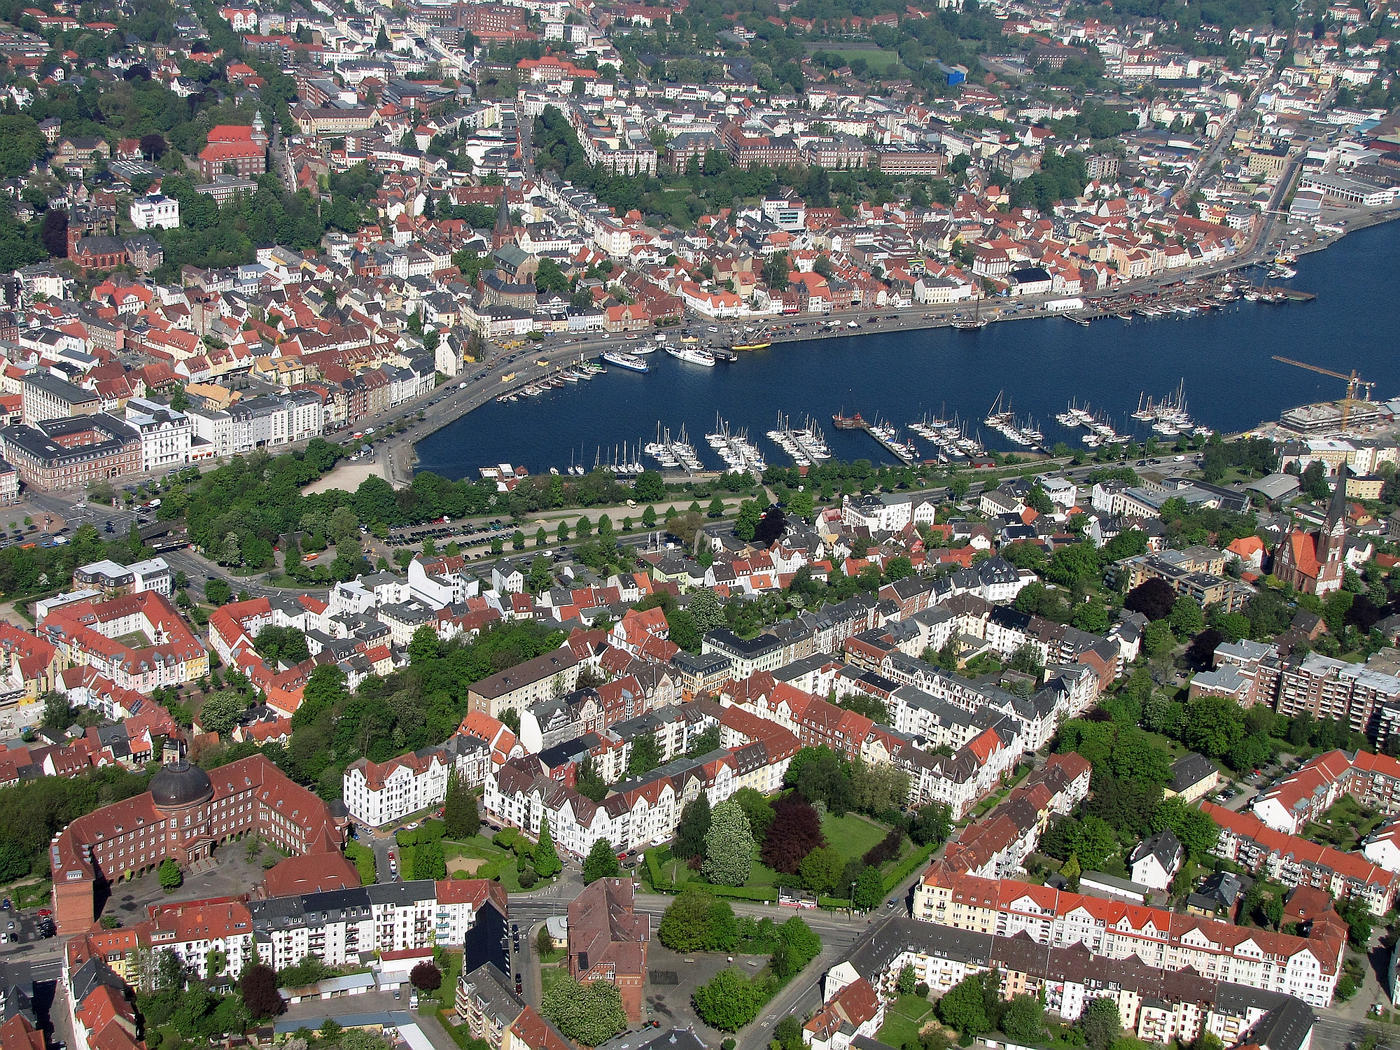 Discover Flensburg's fascination